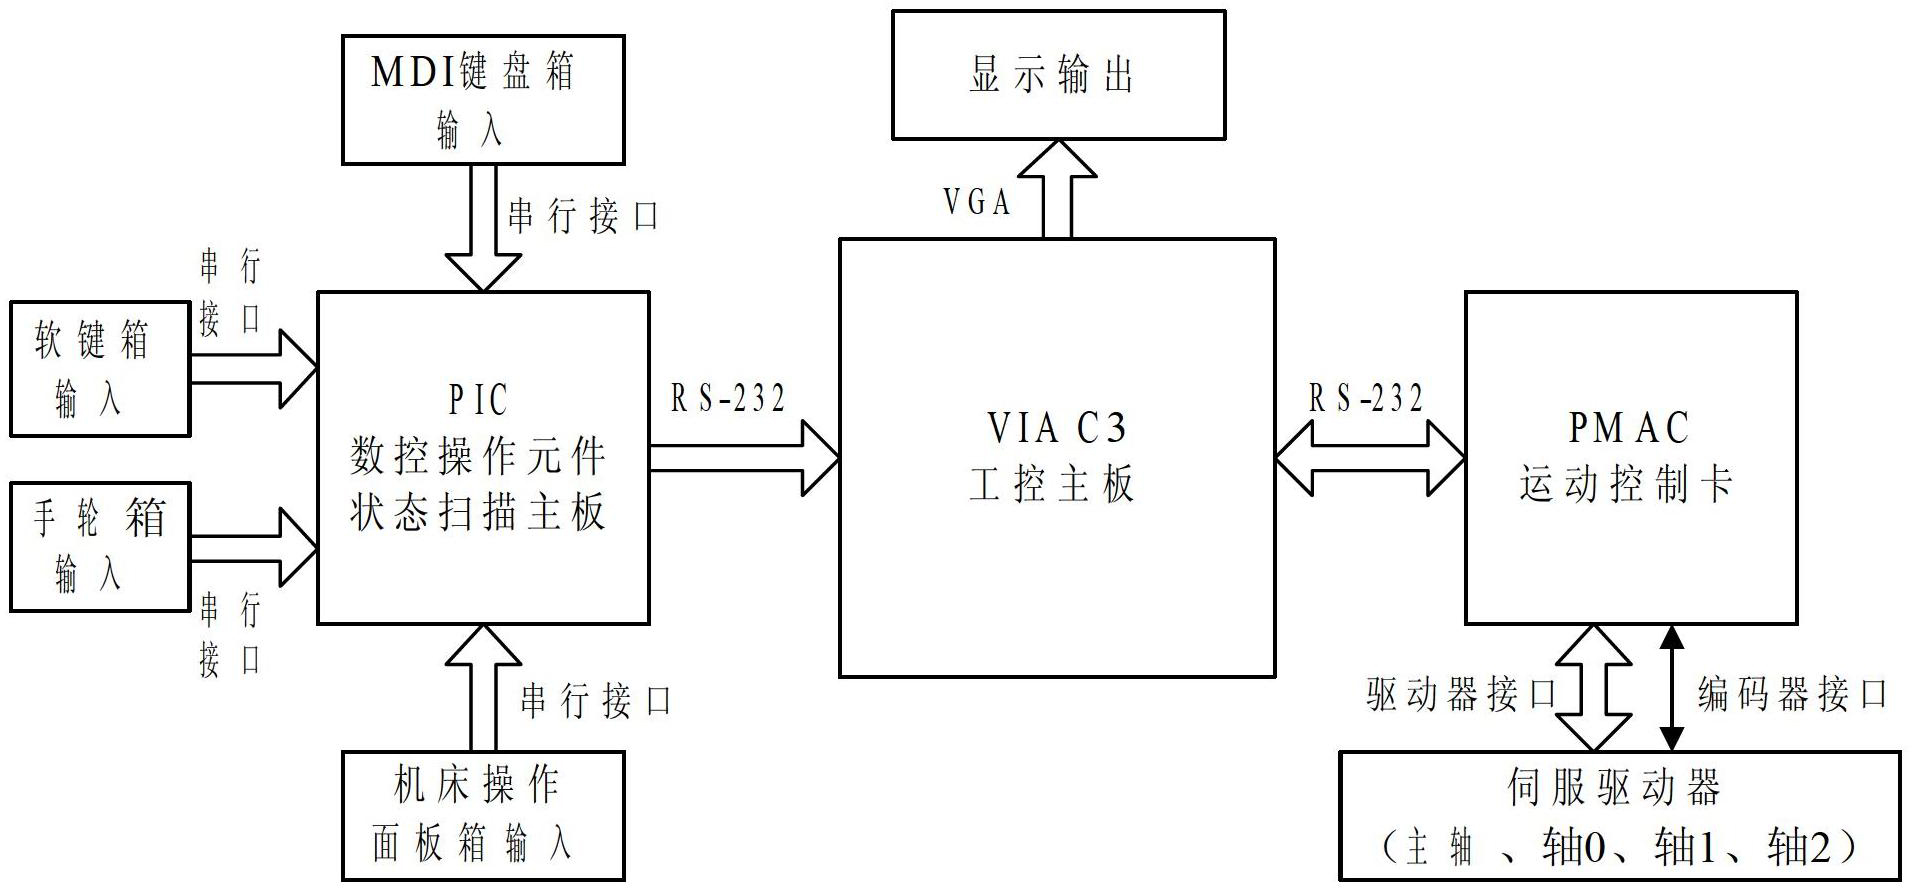 Cross-platform numerical control system